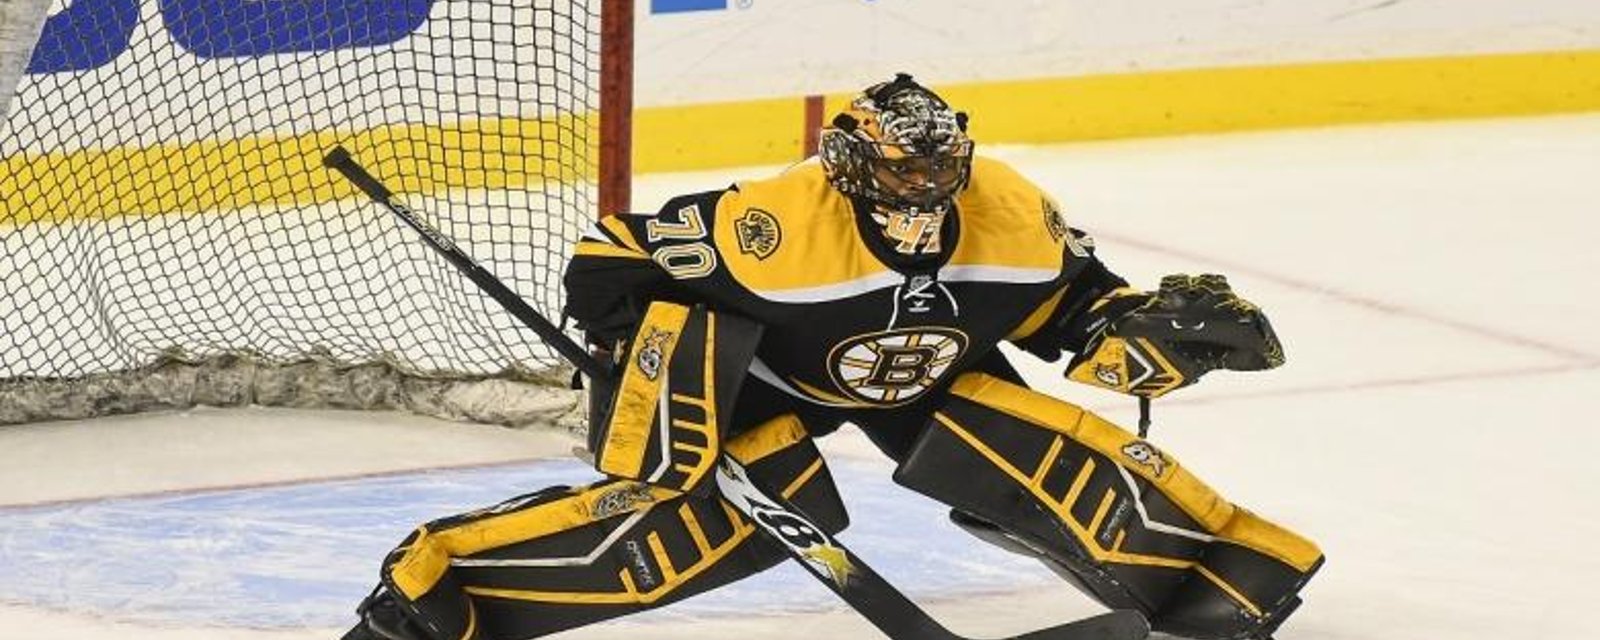 Bruins goalie prospect rushed to hospital